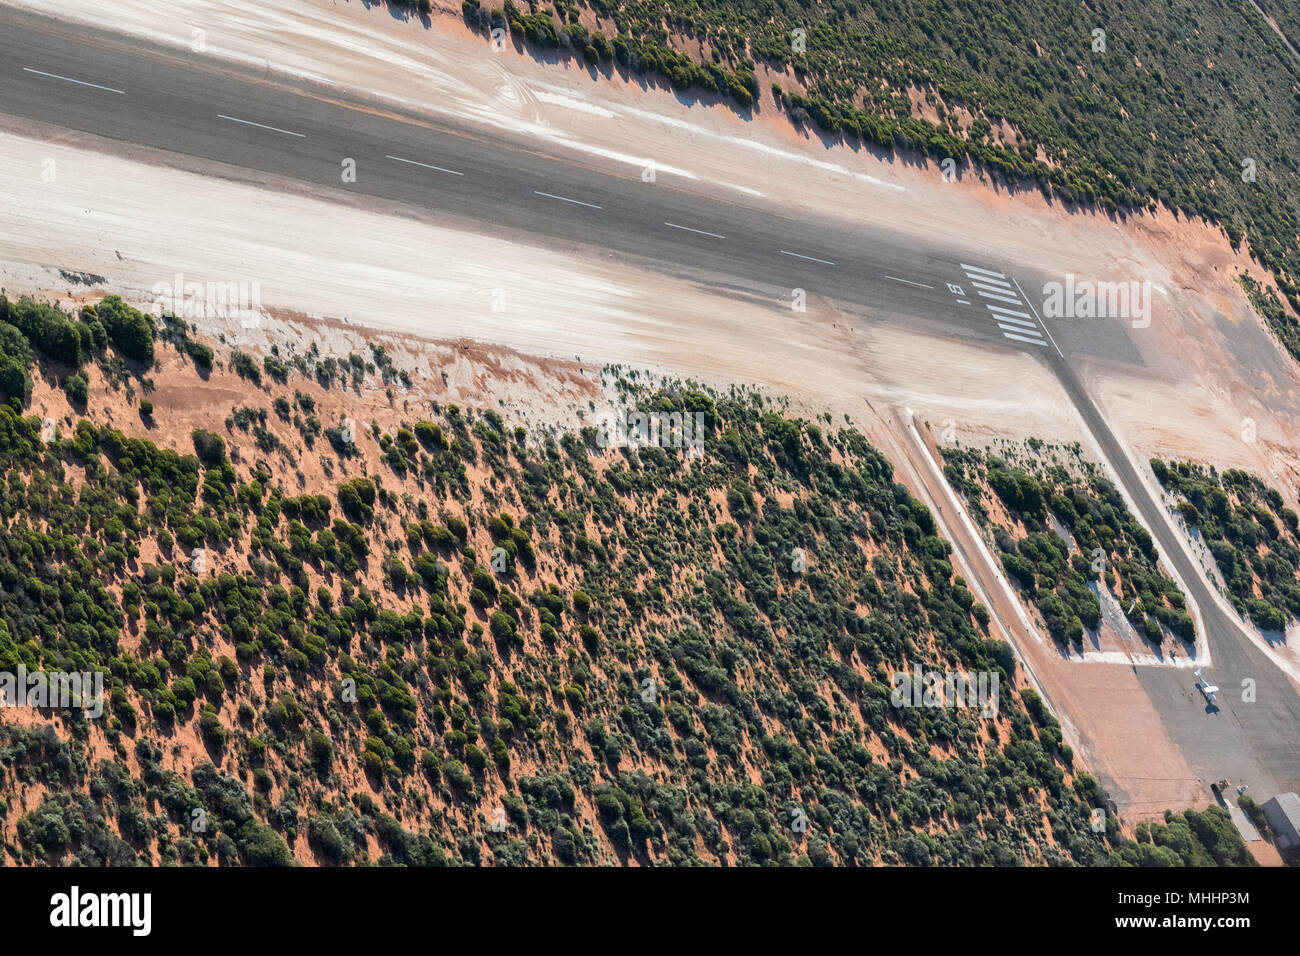 Aerial view of Shark Bay Small desert airport in Australia Stock Photo